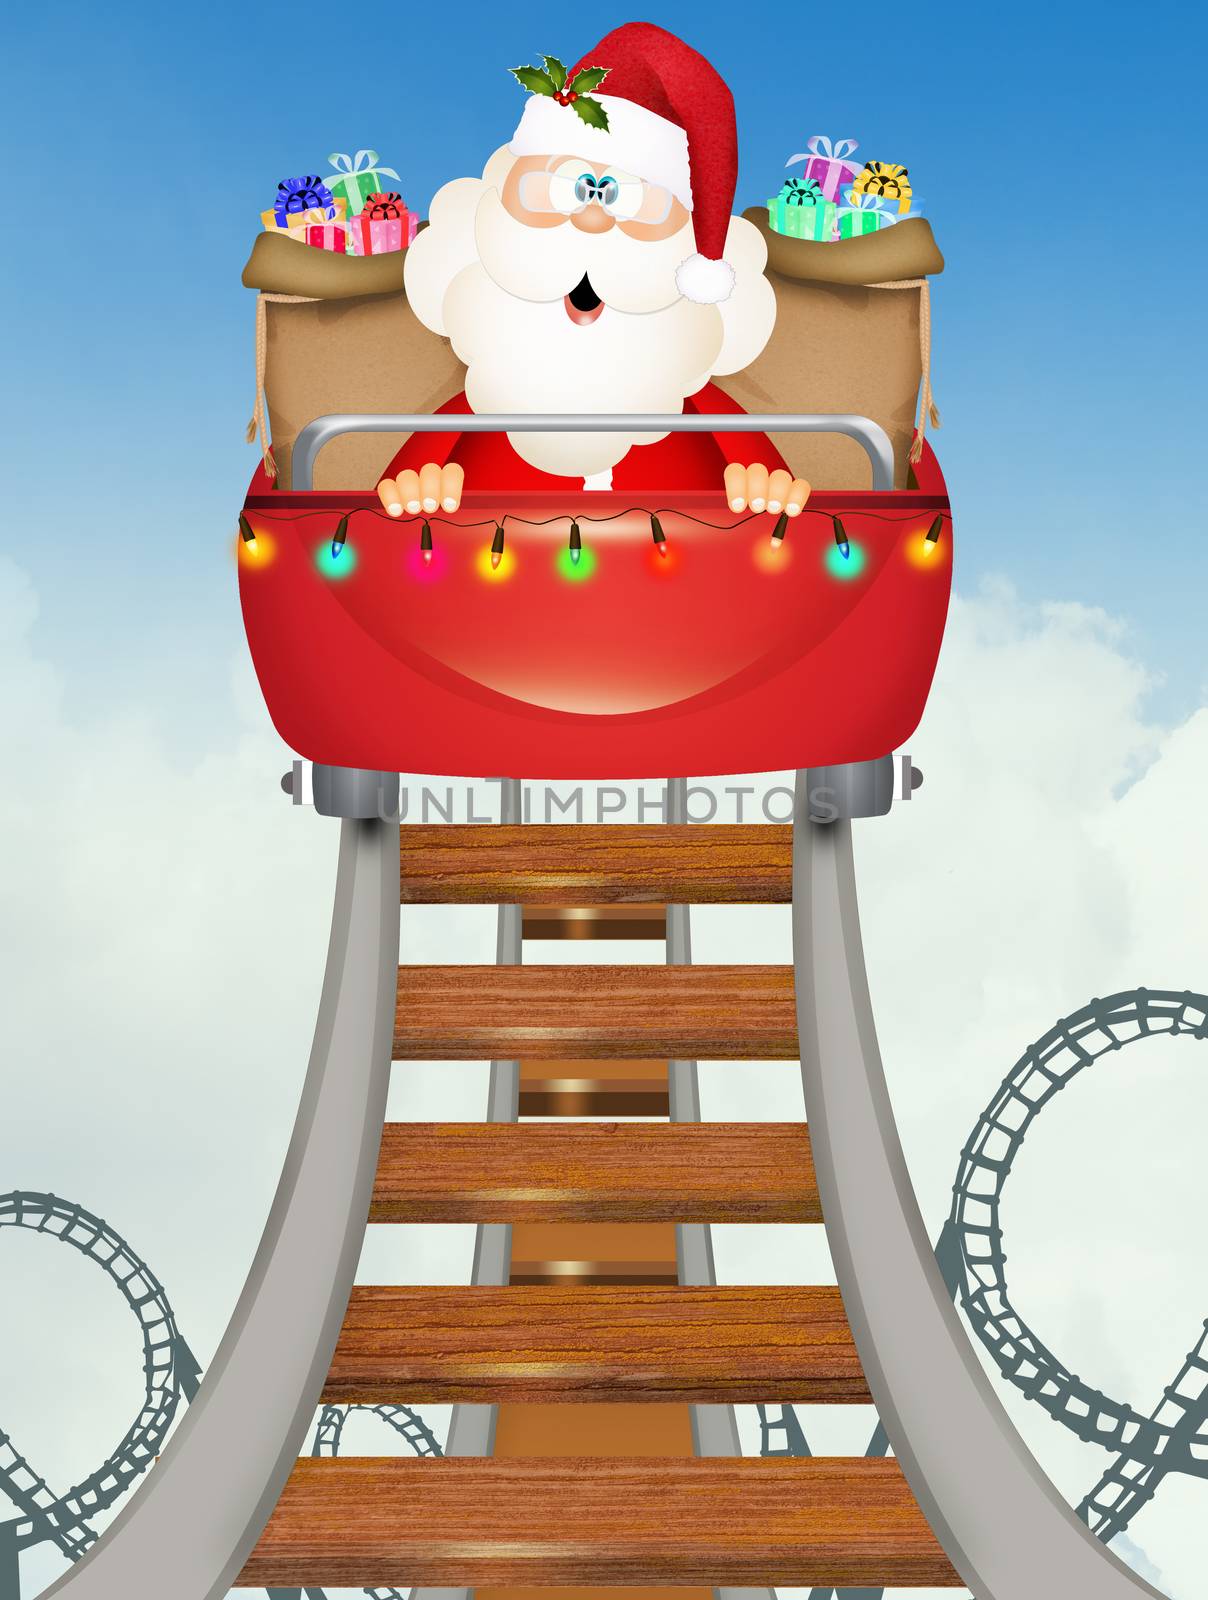 Santa Claus on roller coaster by adrenalina